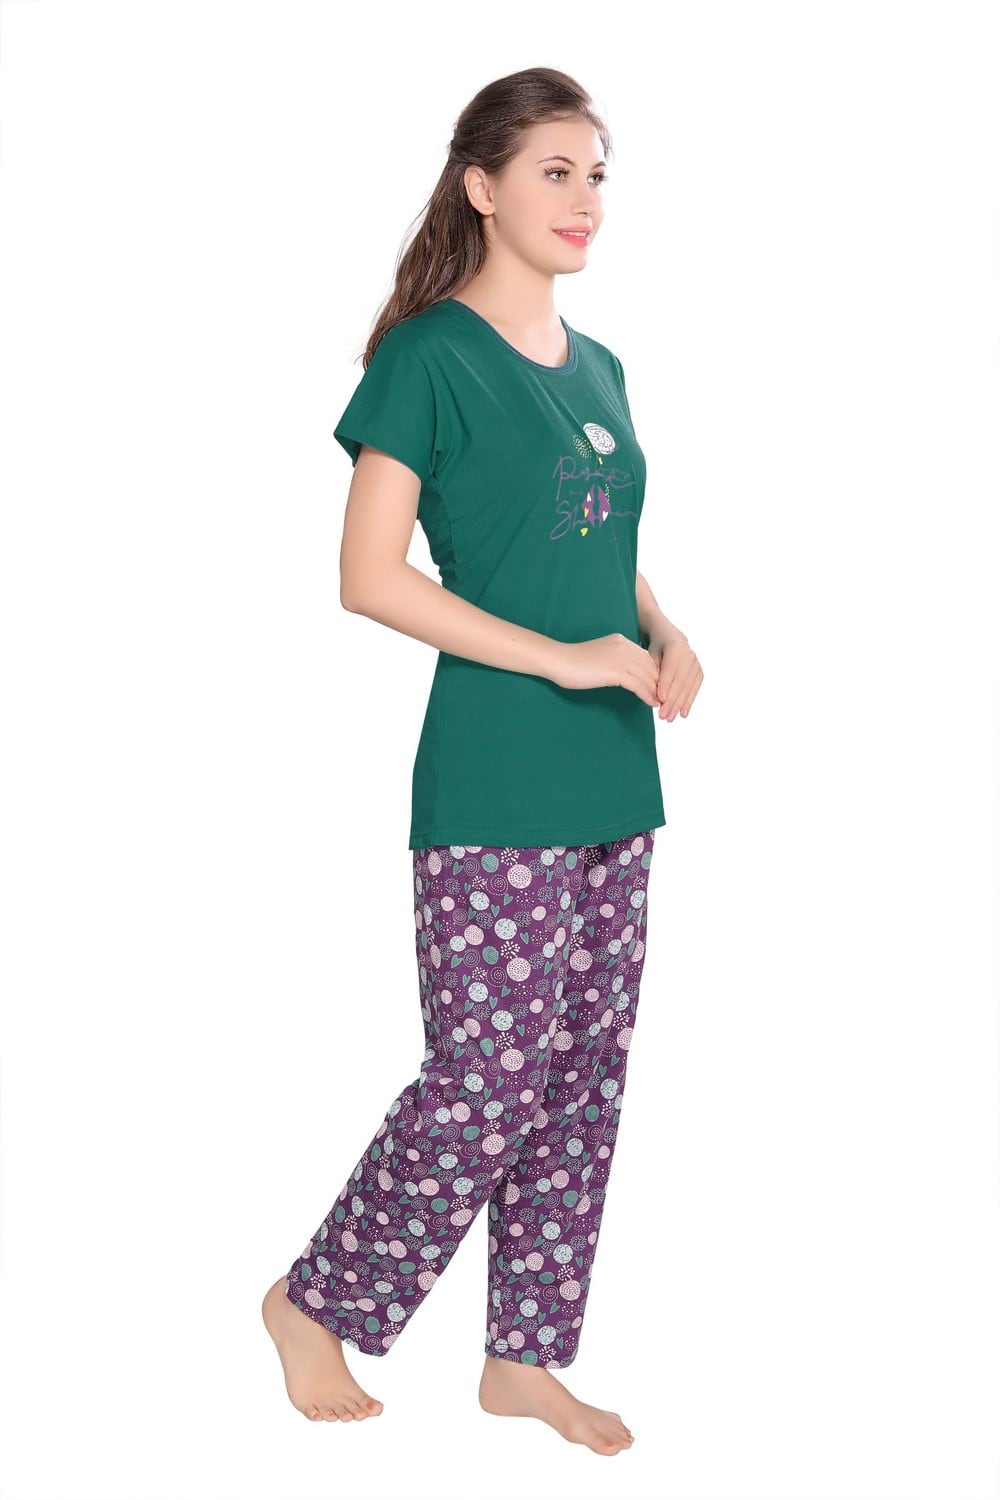 Pierre Donna Women's Cotton Pajama set With Pants - Women Sleepwear